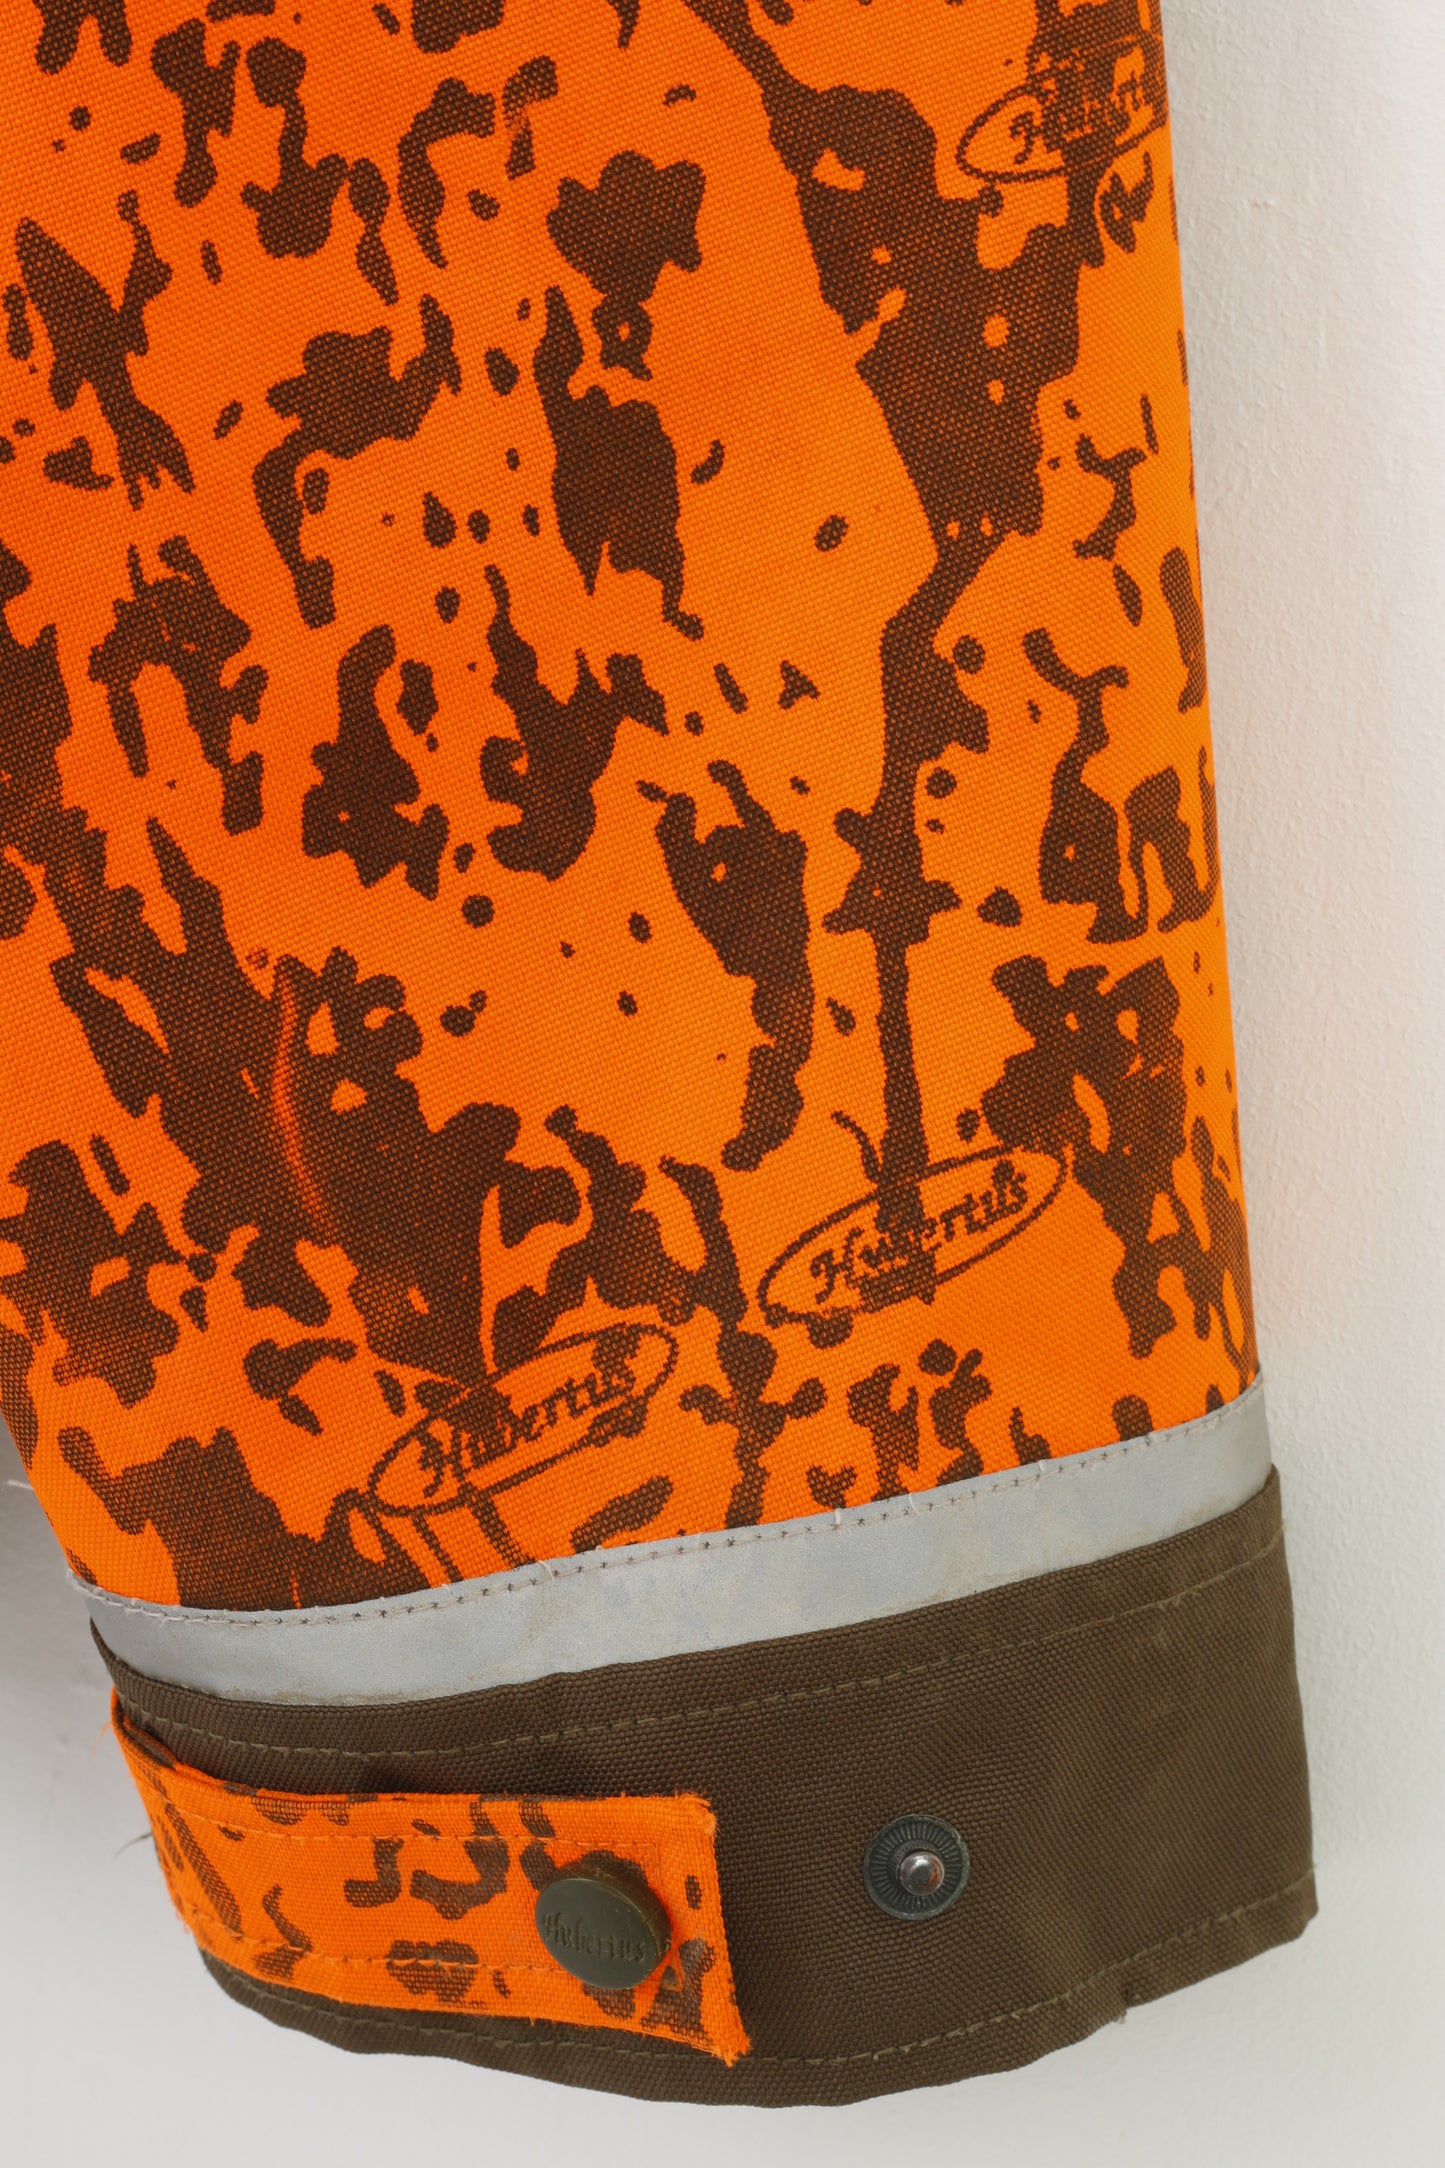 Hubertus Hunting Men 6XL Jacket Orange Waterproof Full Zipper Outwear Pockets Working Clothes Top